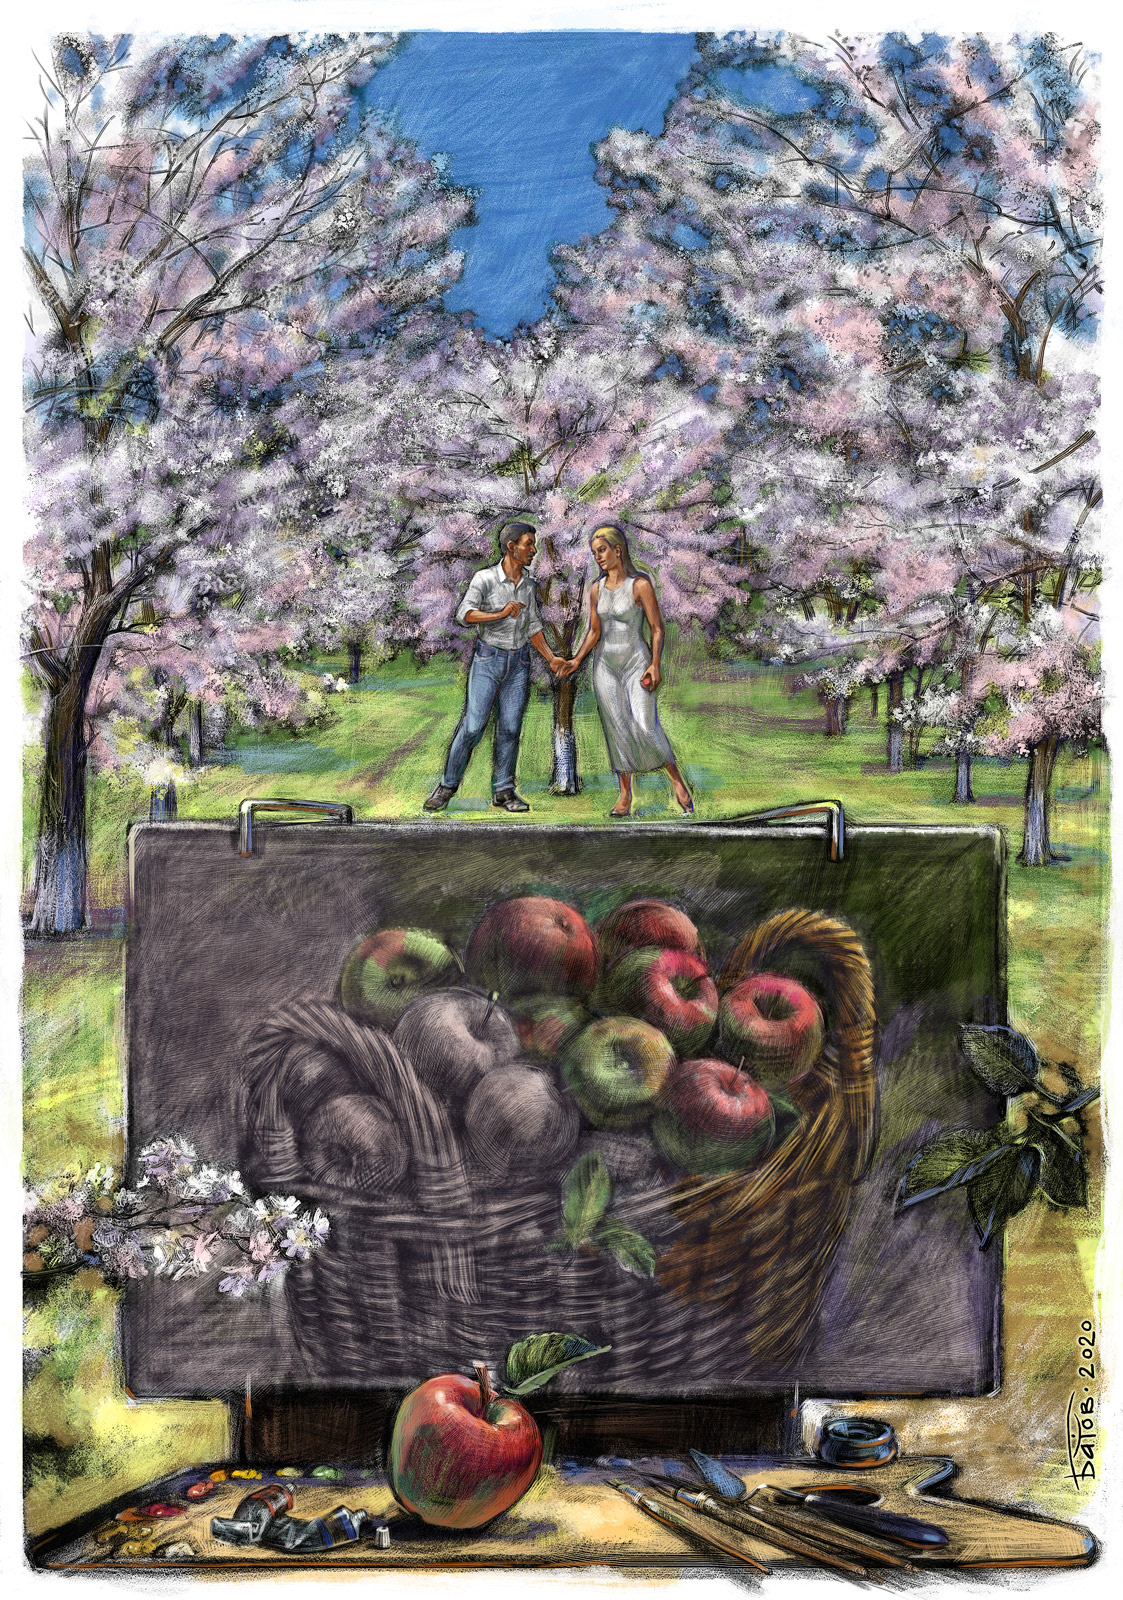 ZapovednikSkazok сказка eden Adam Eve paradise apple blossoms spring fairytale apple